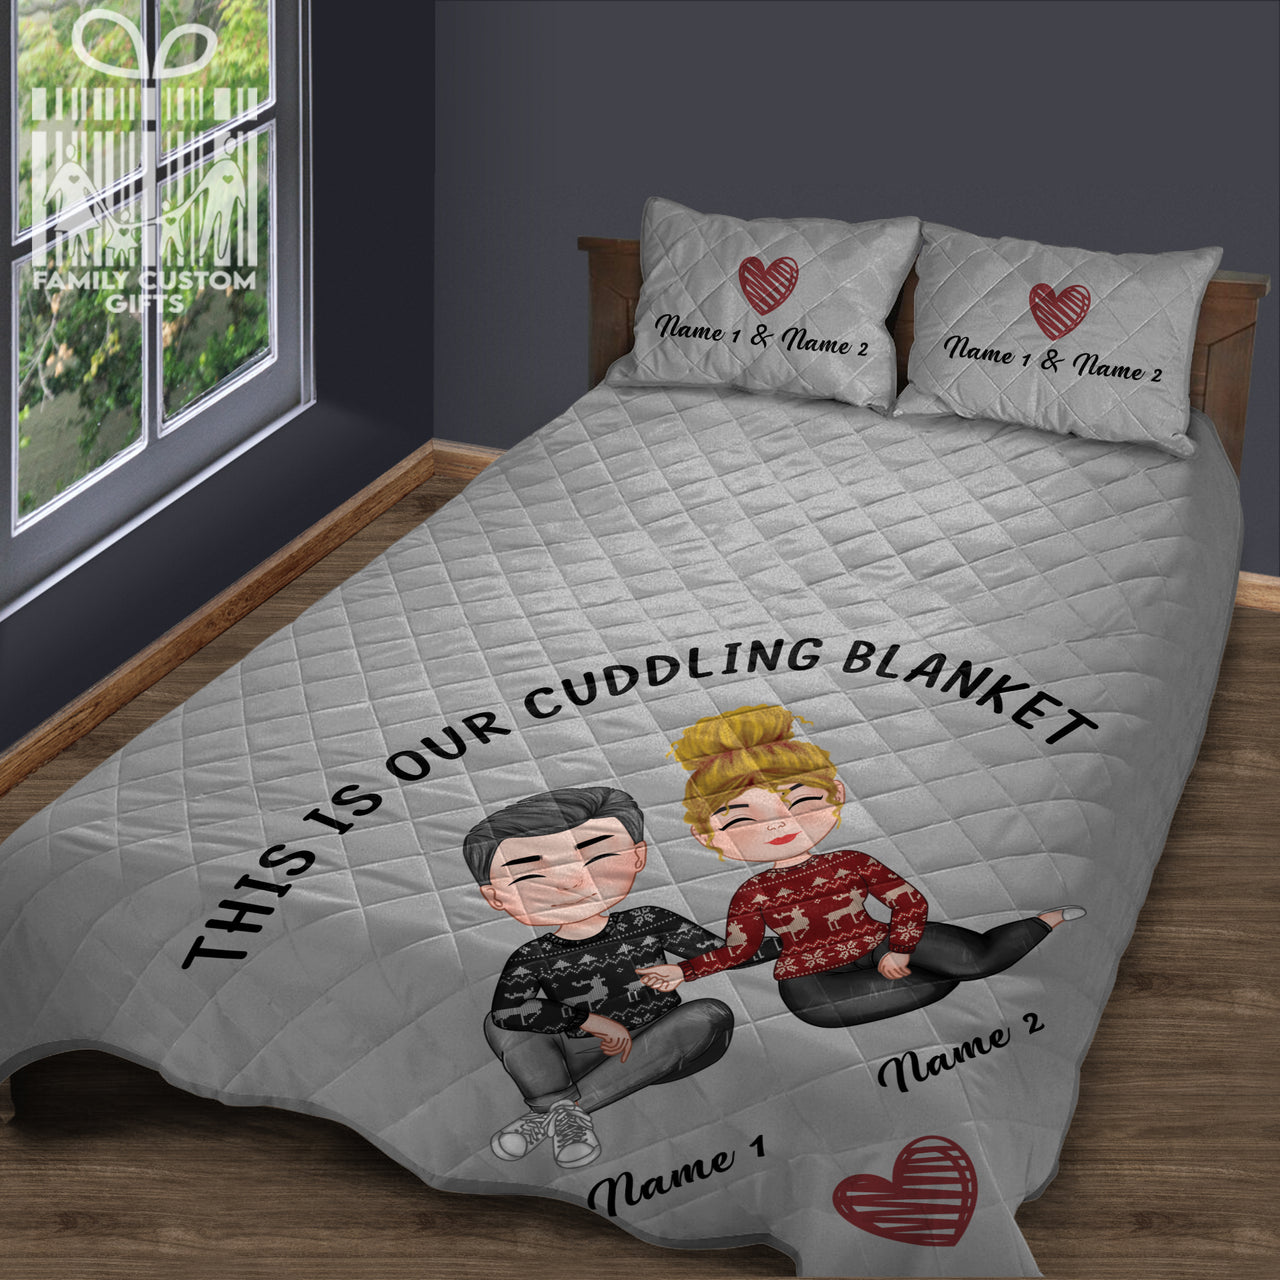 Custom Quilt Sets Our Cuddling Premium Quilt Bedding for Boys Girls Men Women Couple Wife Husband